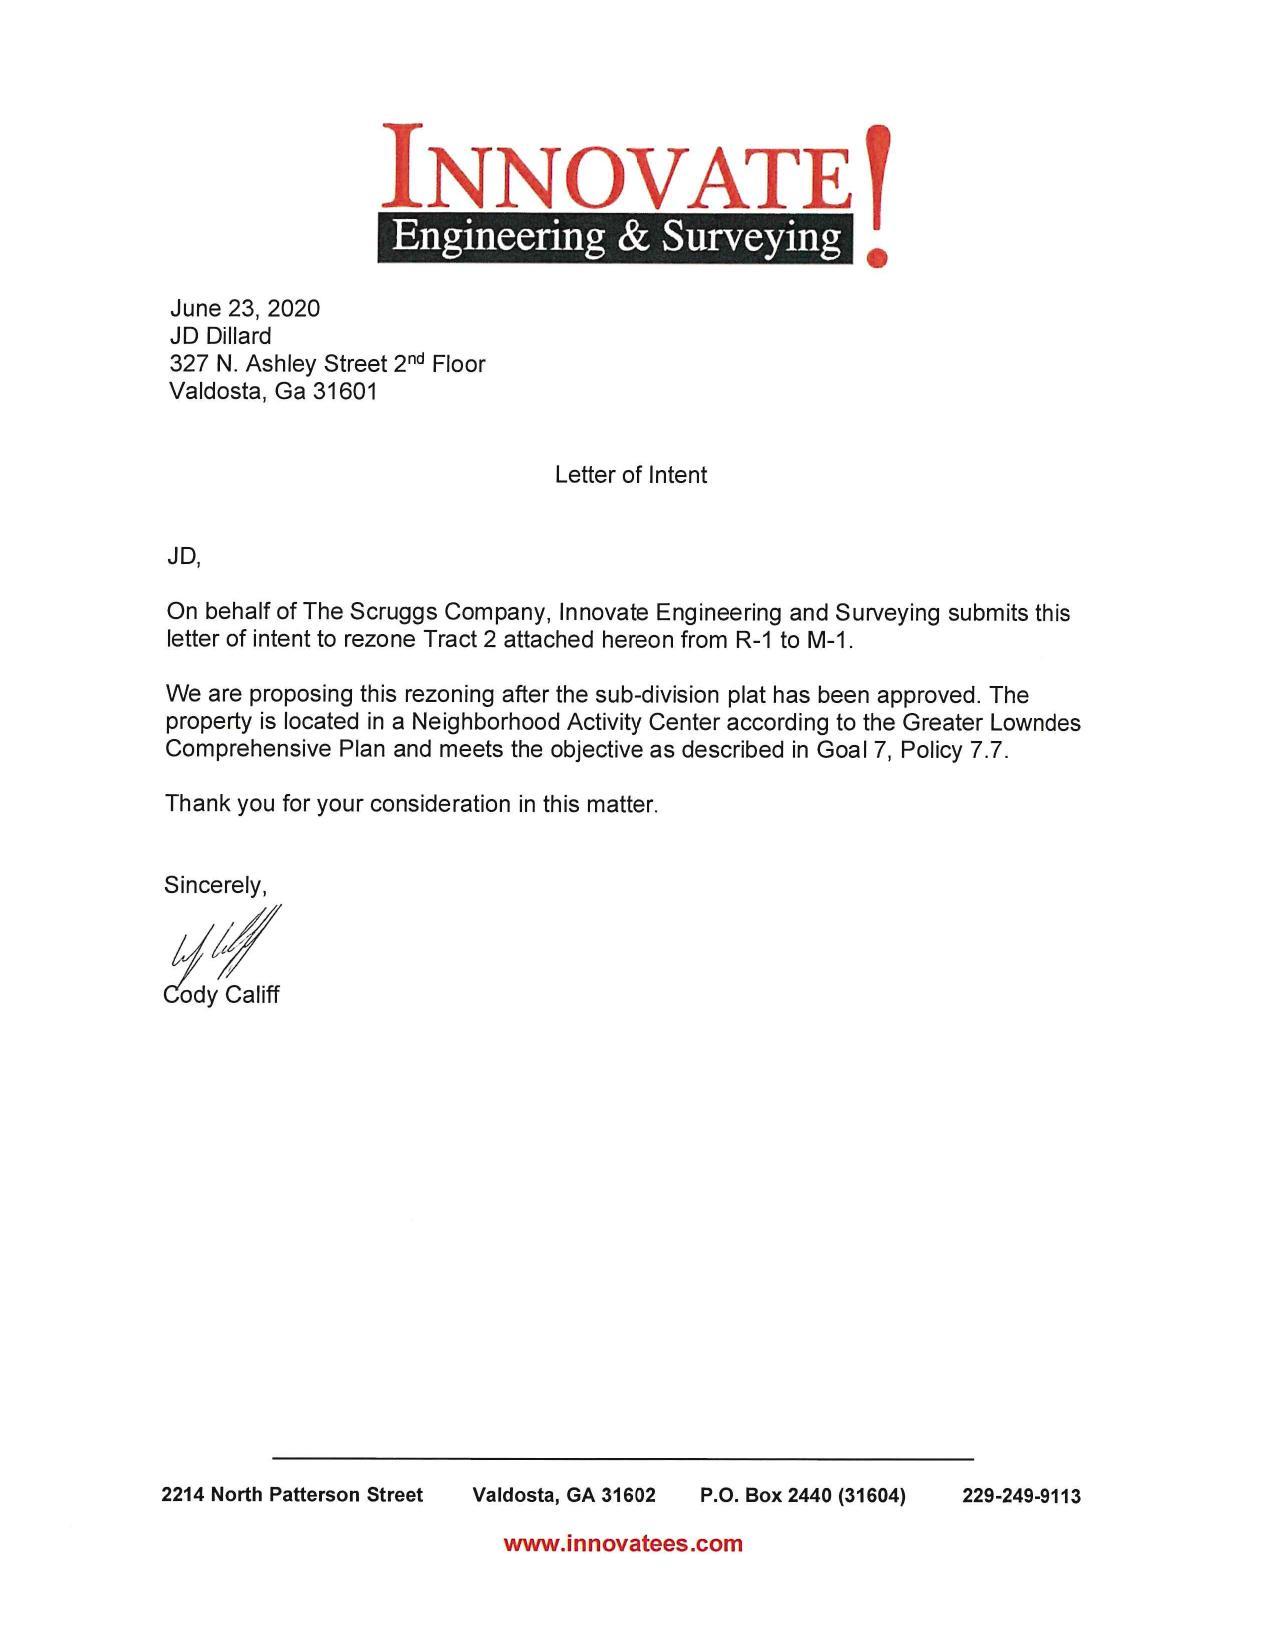 Letter of Intent, Cody Califf, Innovate! E&S on behalf The Scruggs Company